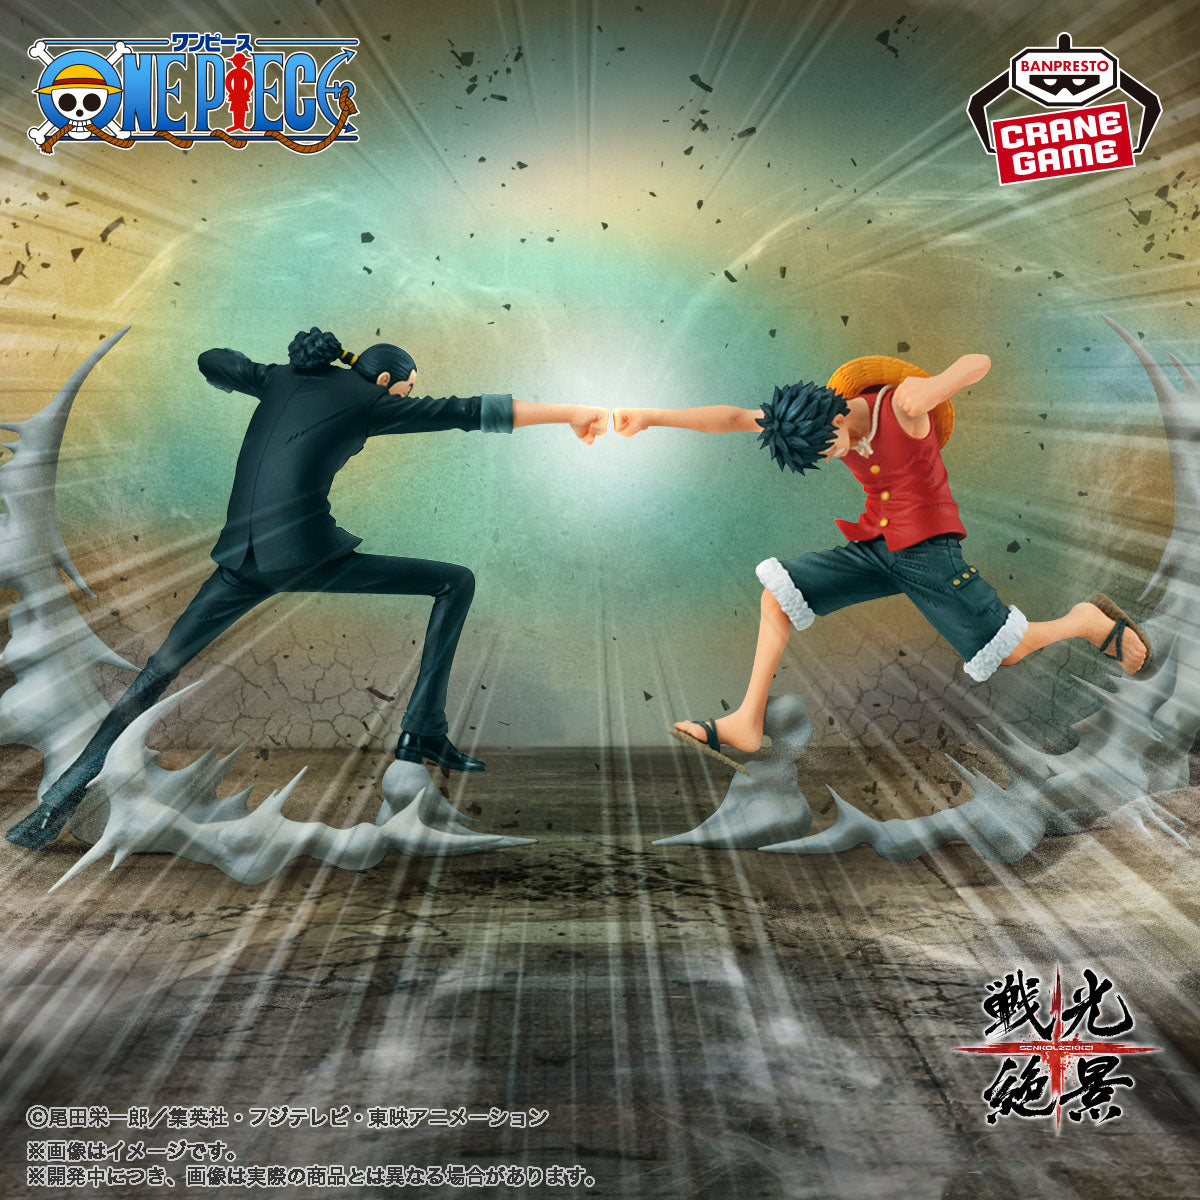 In Arrivo One Piece - Spectacular Battle Scenery - Bundle